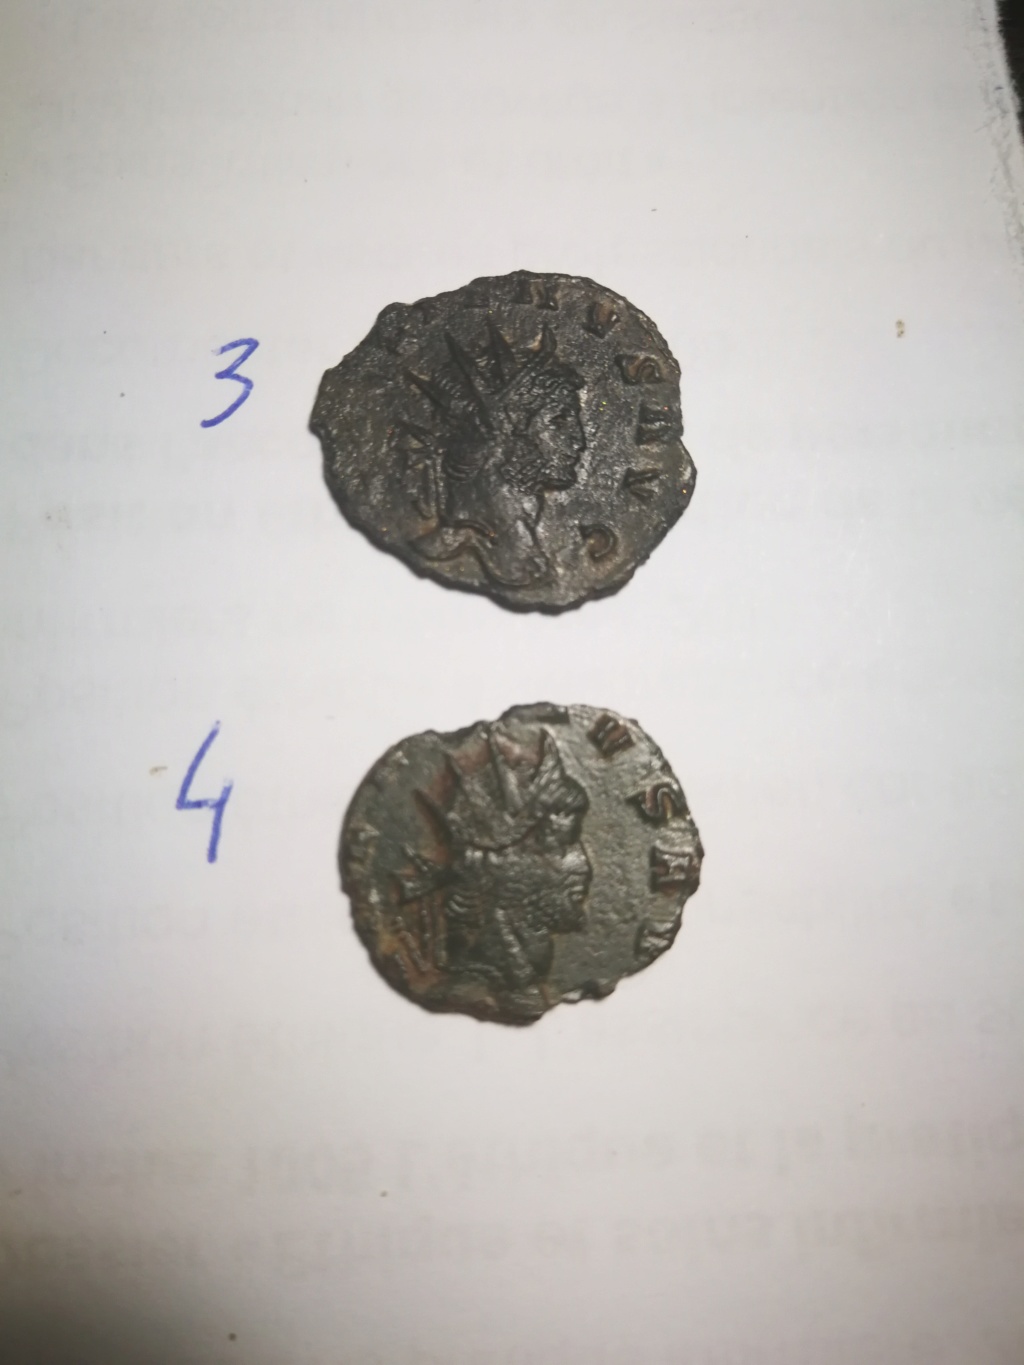 Monnaies romaines à ID 2 Img_2027